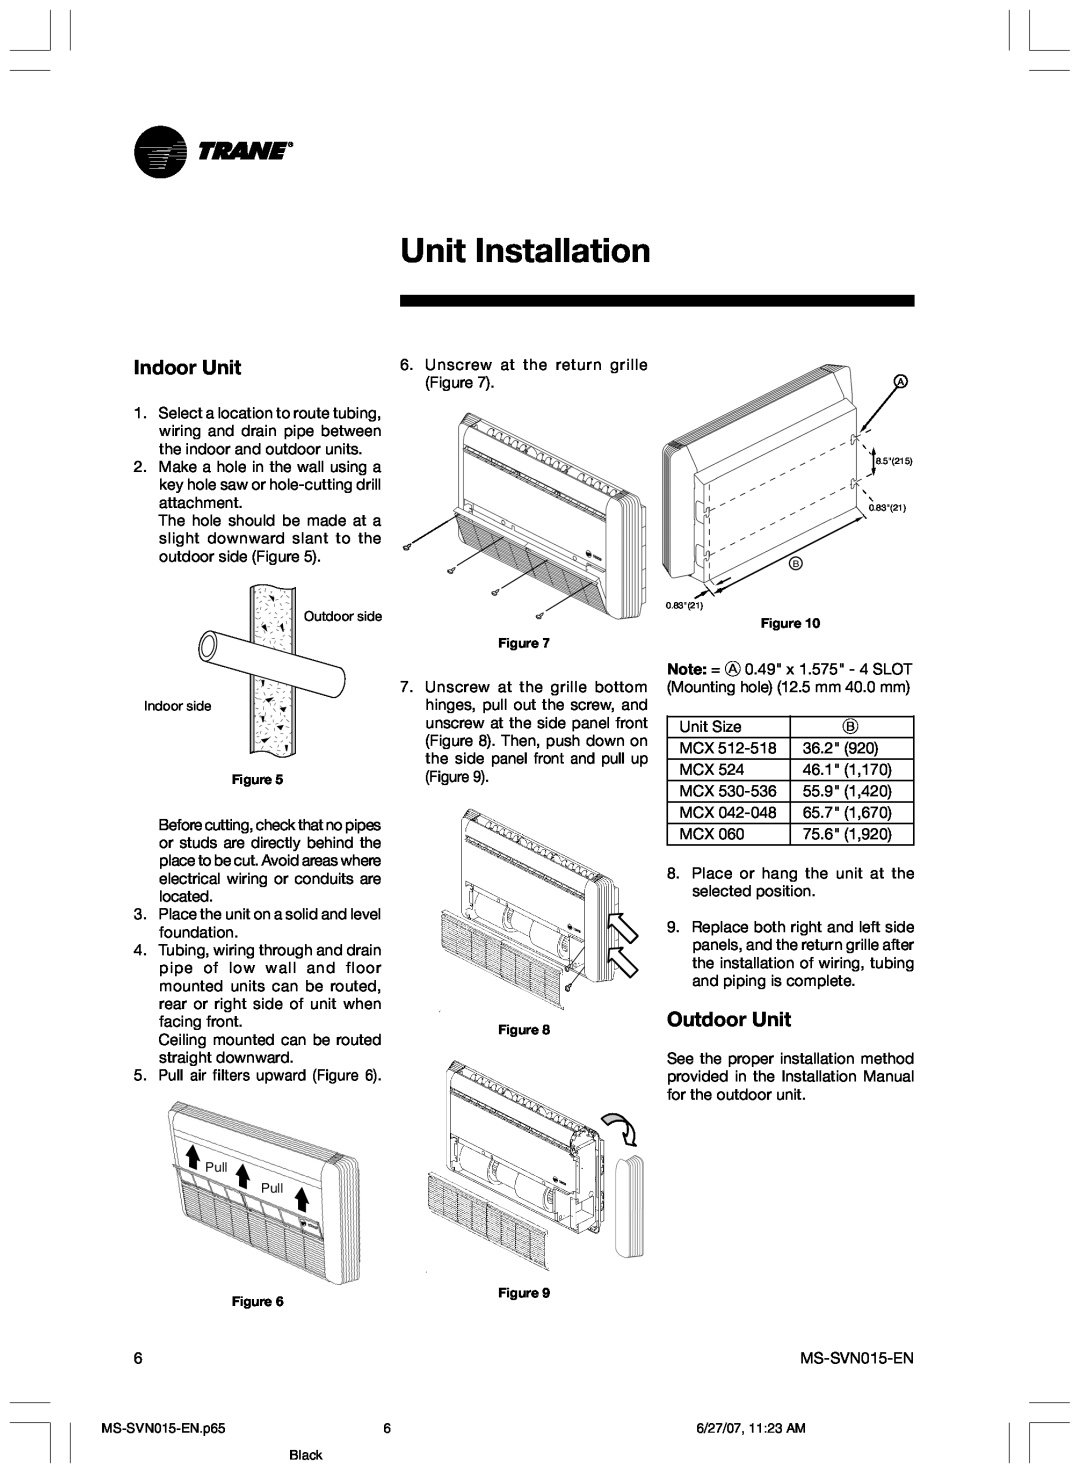 Trane MS-SVN015-EN installation manual Unit Installation, Indoor Unit, Outdoor Unit 